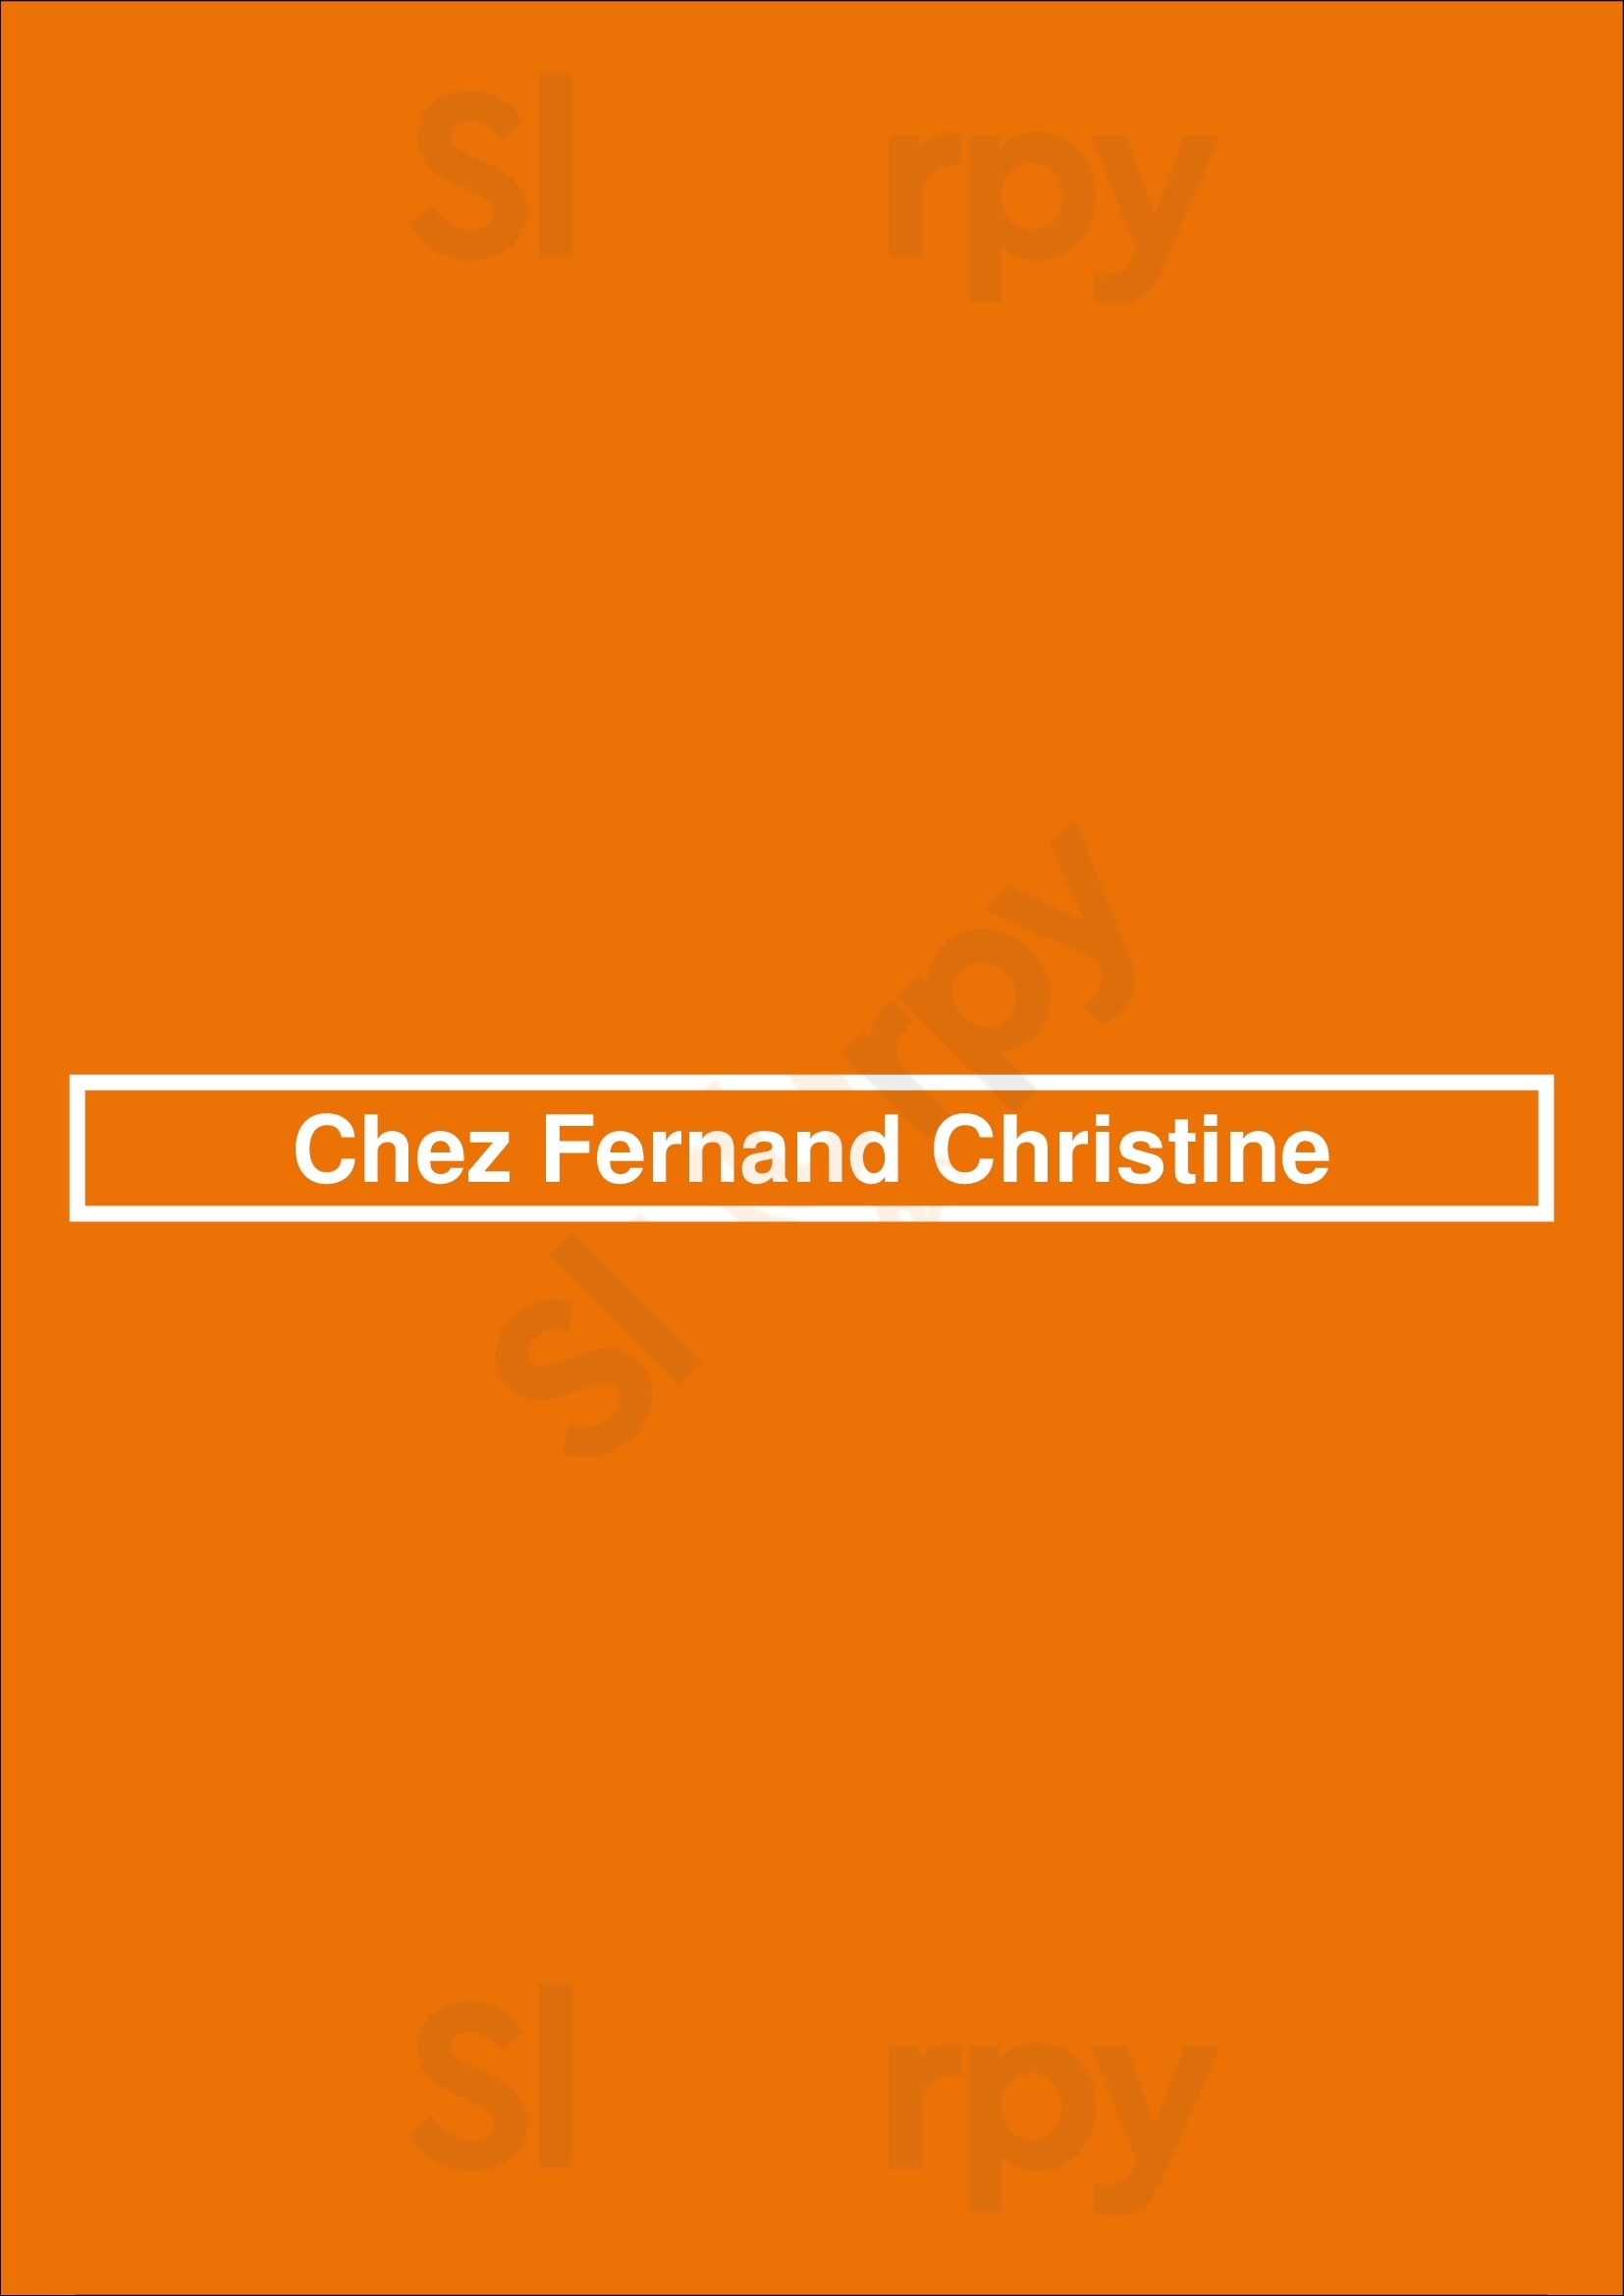 Chez Fernand Christine Paris Menu - 1